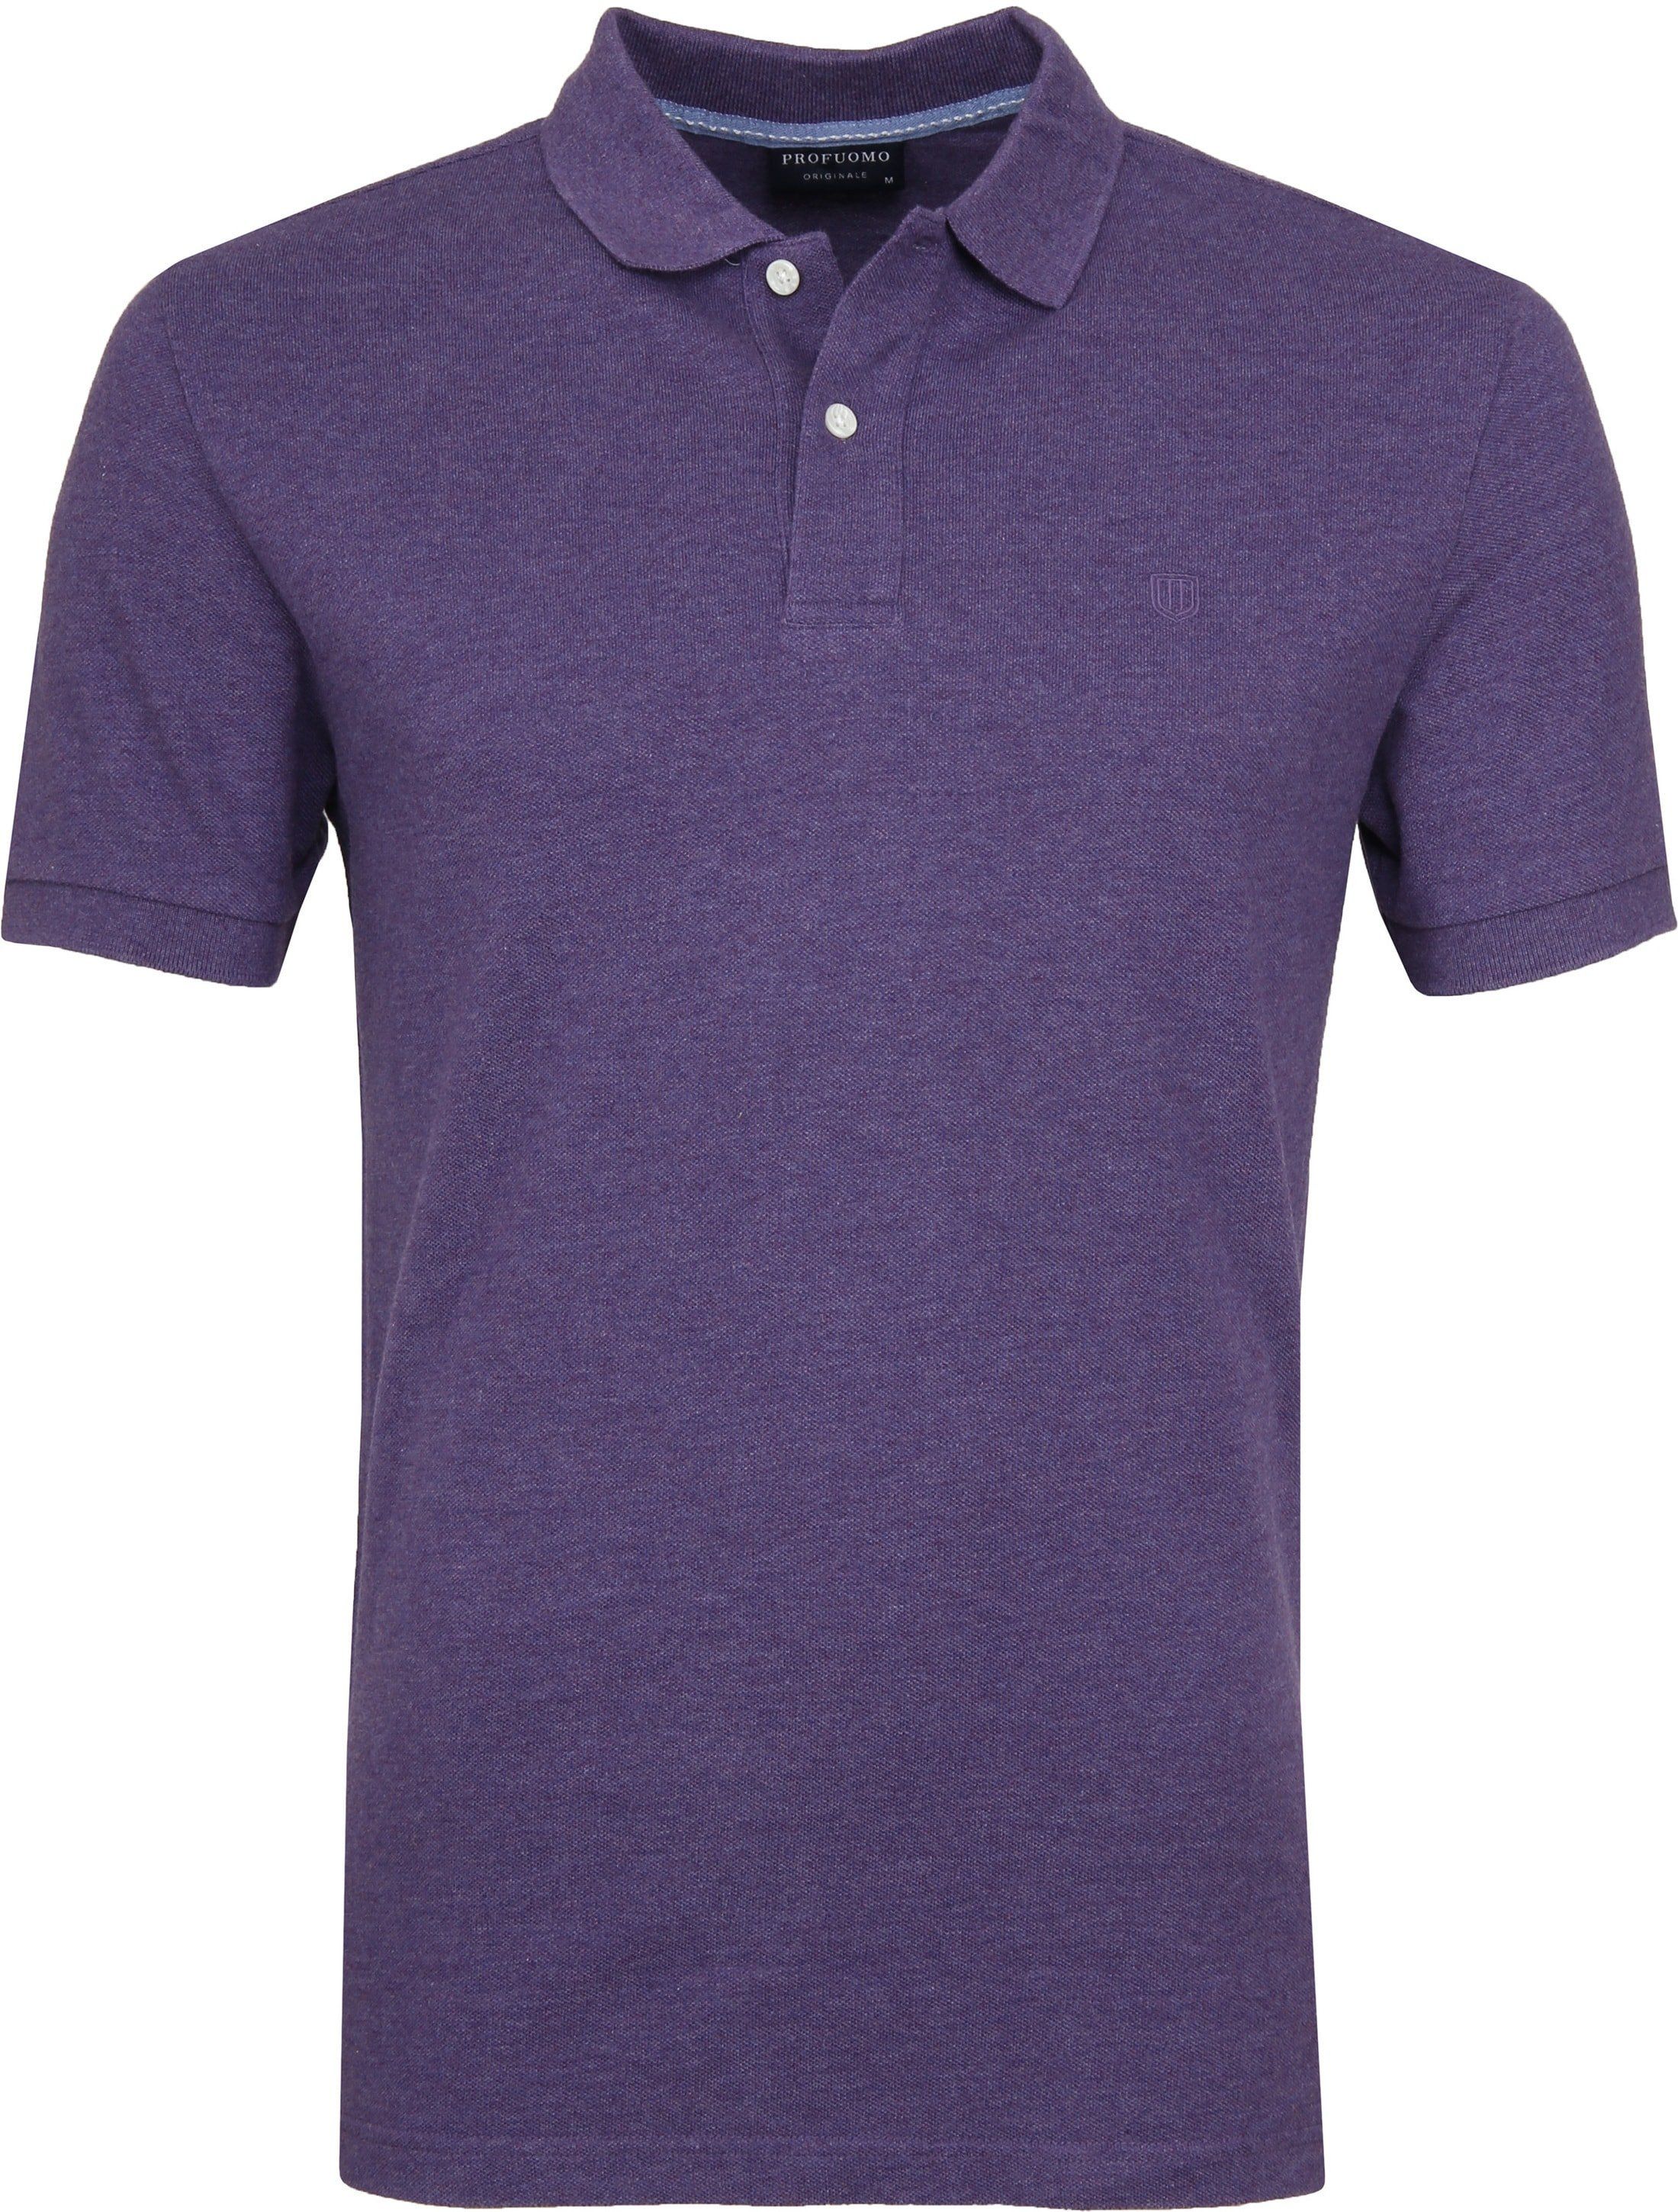 Profuomo Short Sleeve Poloshirt Purple size S